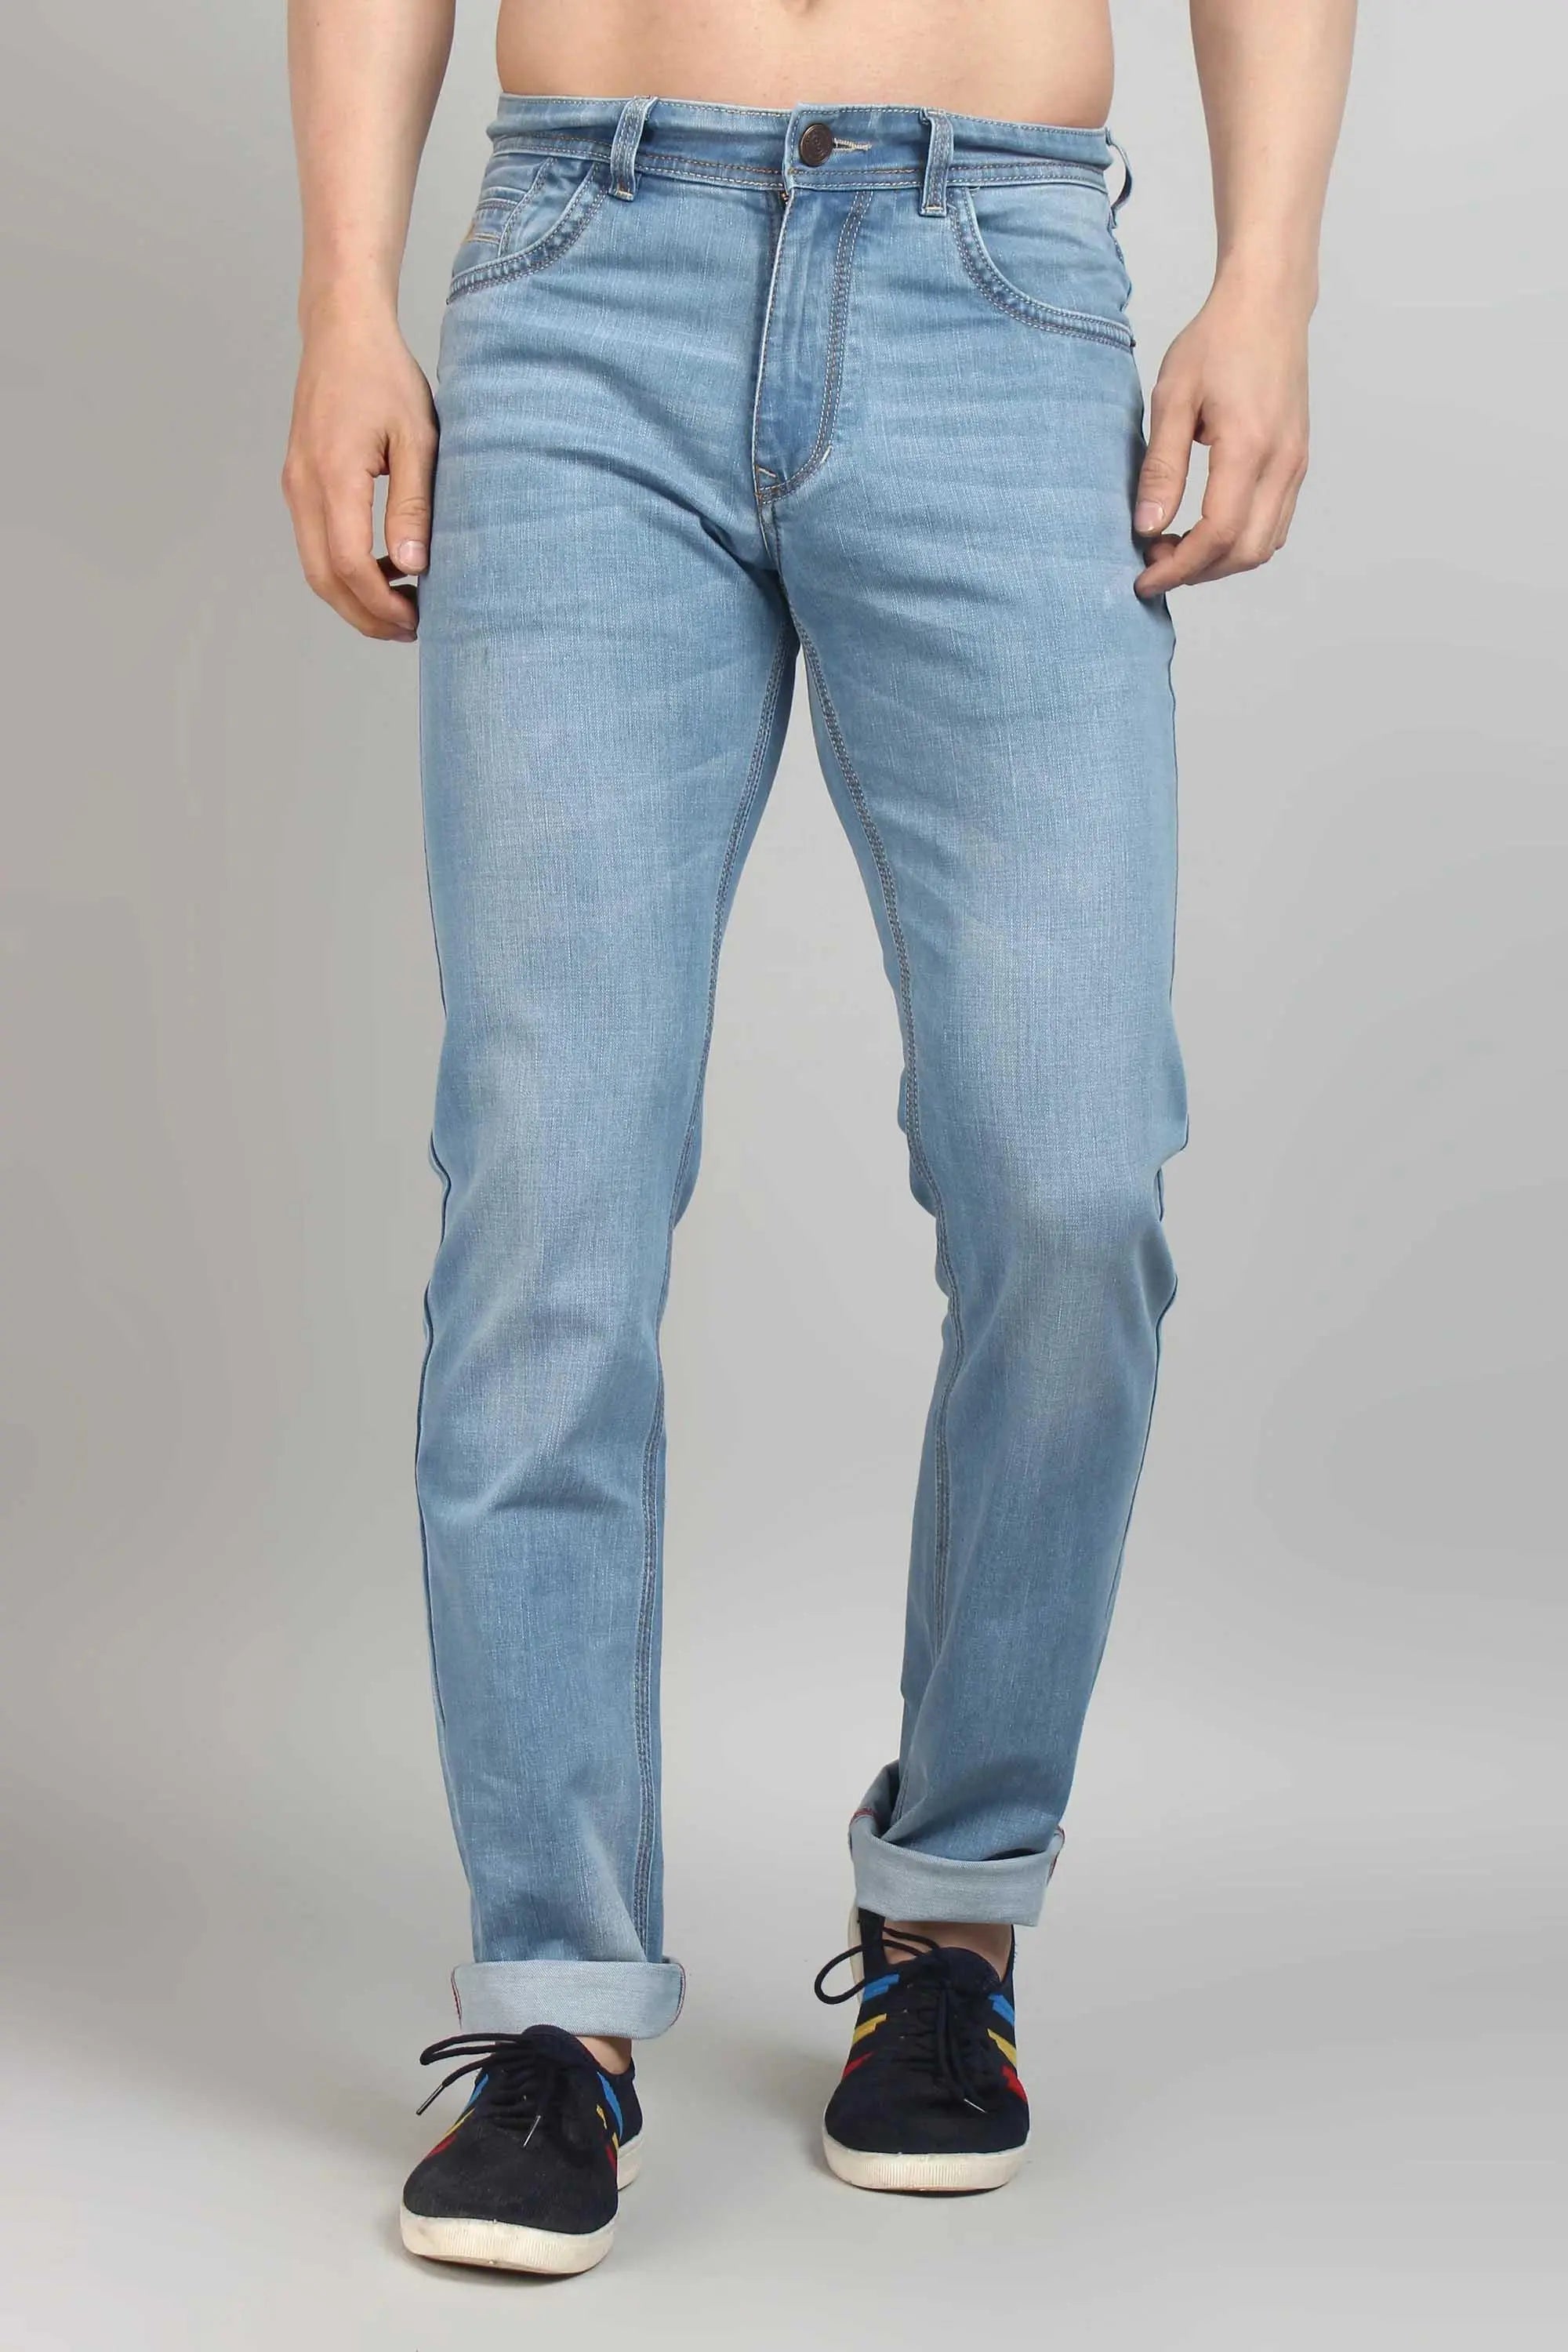 Buy Trendy Jeans for Men Online in India | wrangler